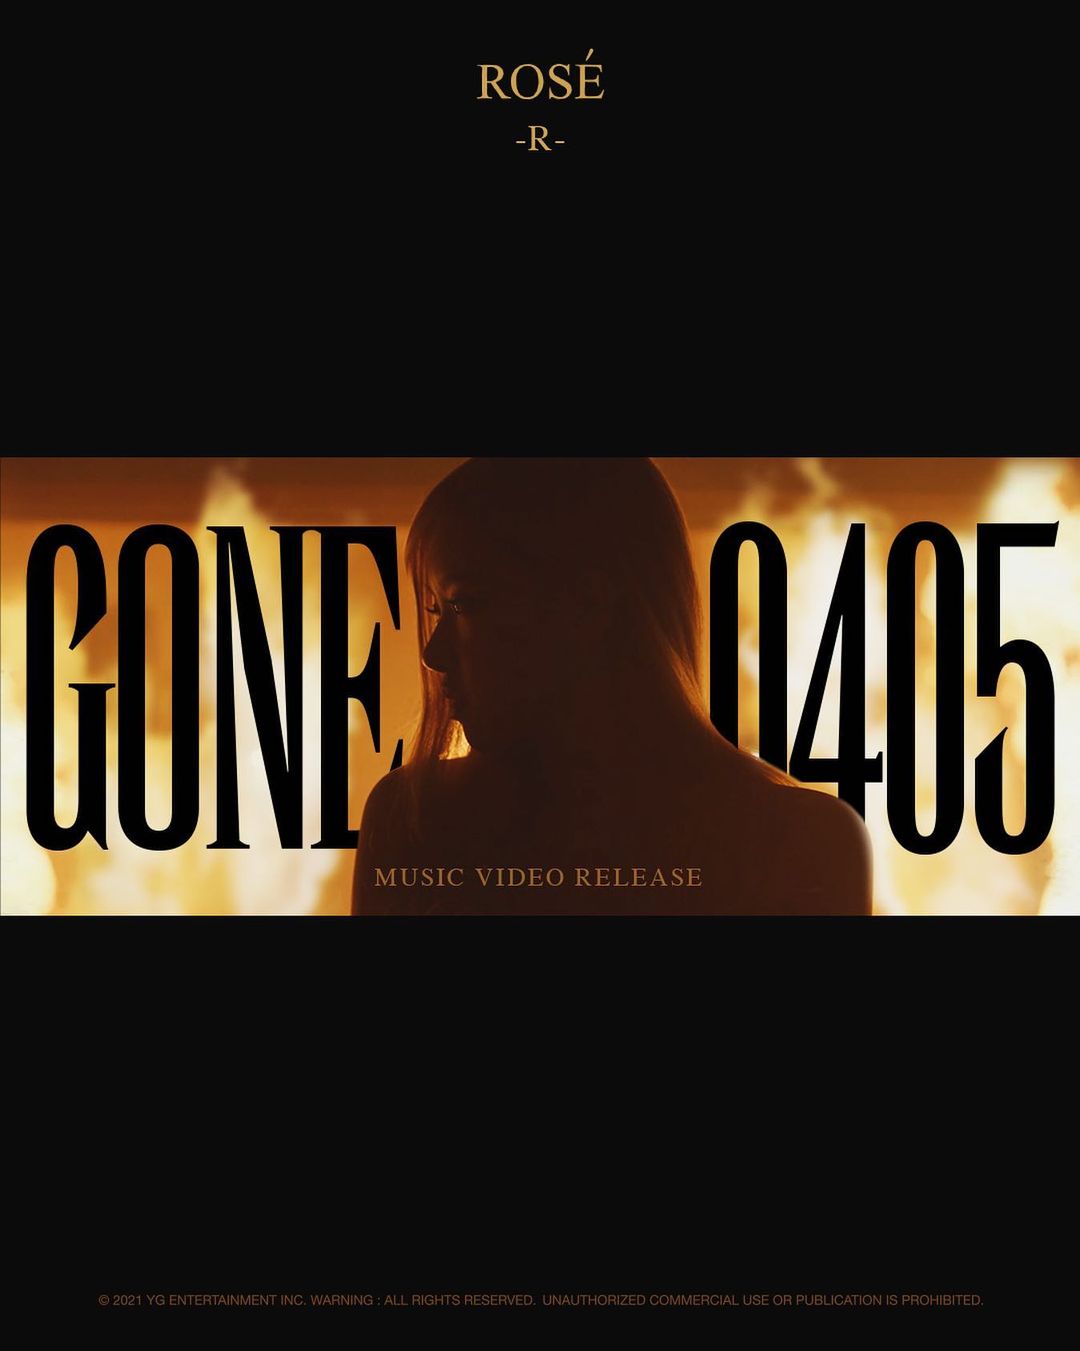 #ROSÉ #로제 #BLACKPINK #블랙핑크 #FirstSingleAlbum #R #Gone #MV #TeaserPoster #2021040…